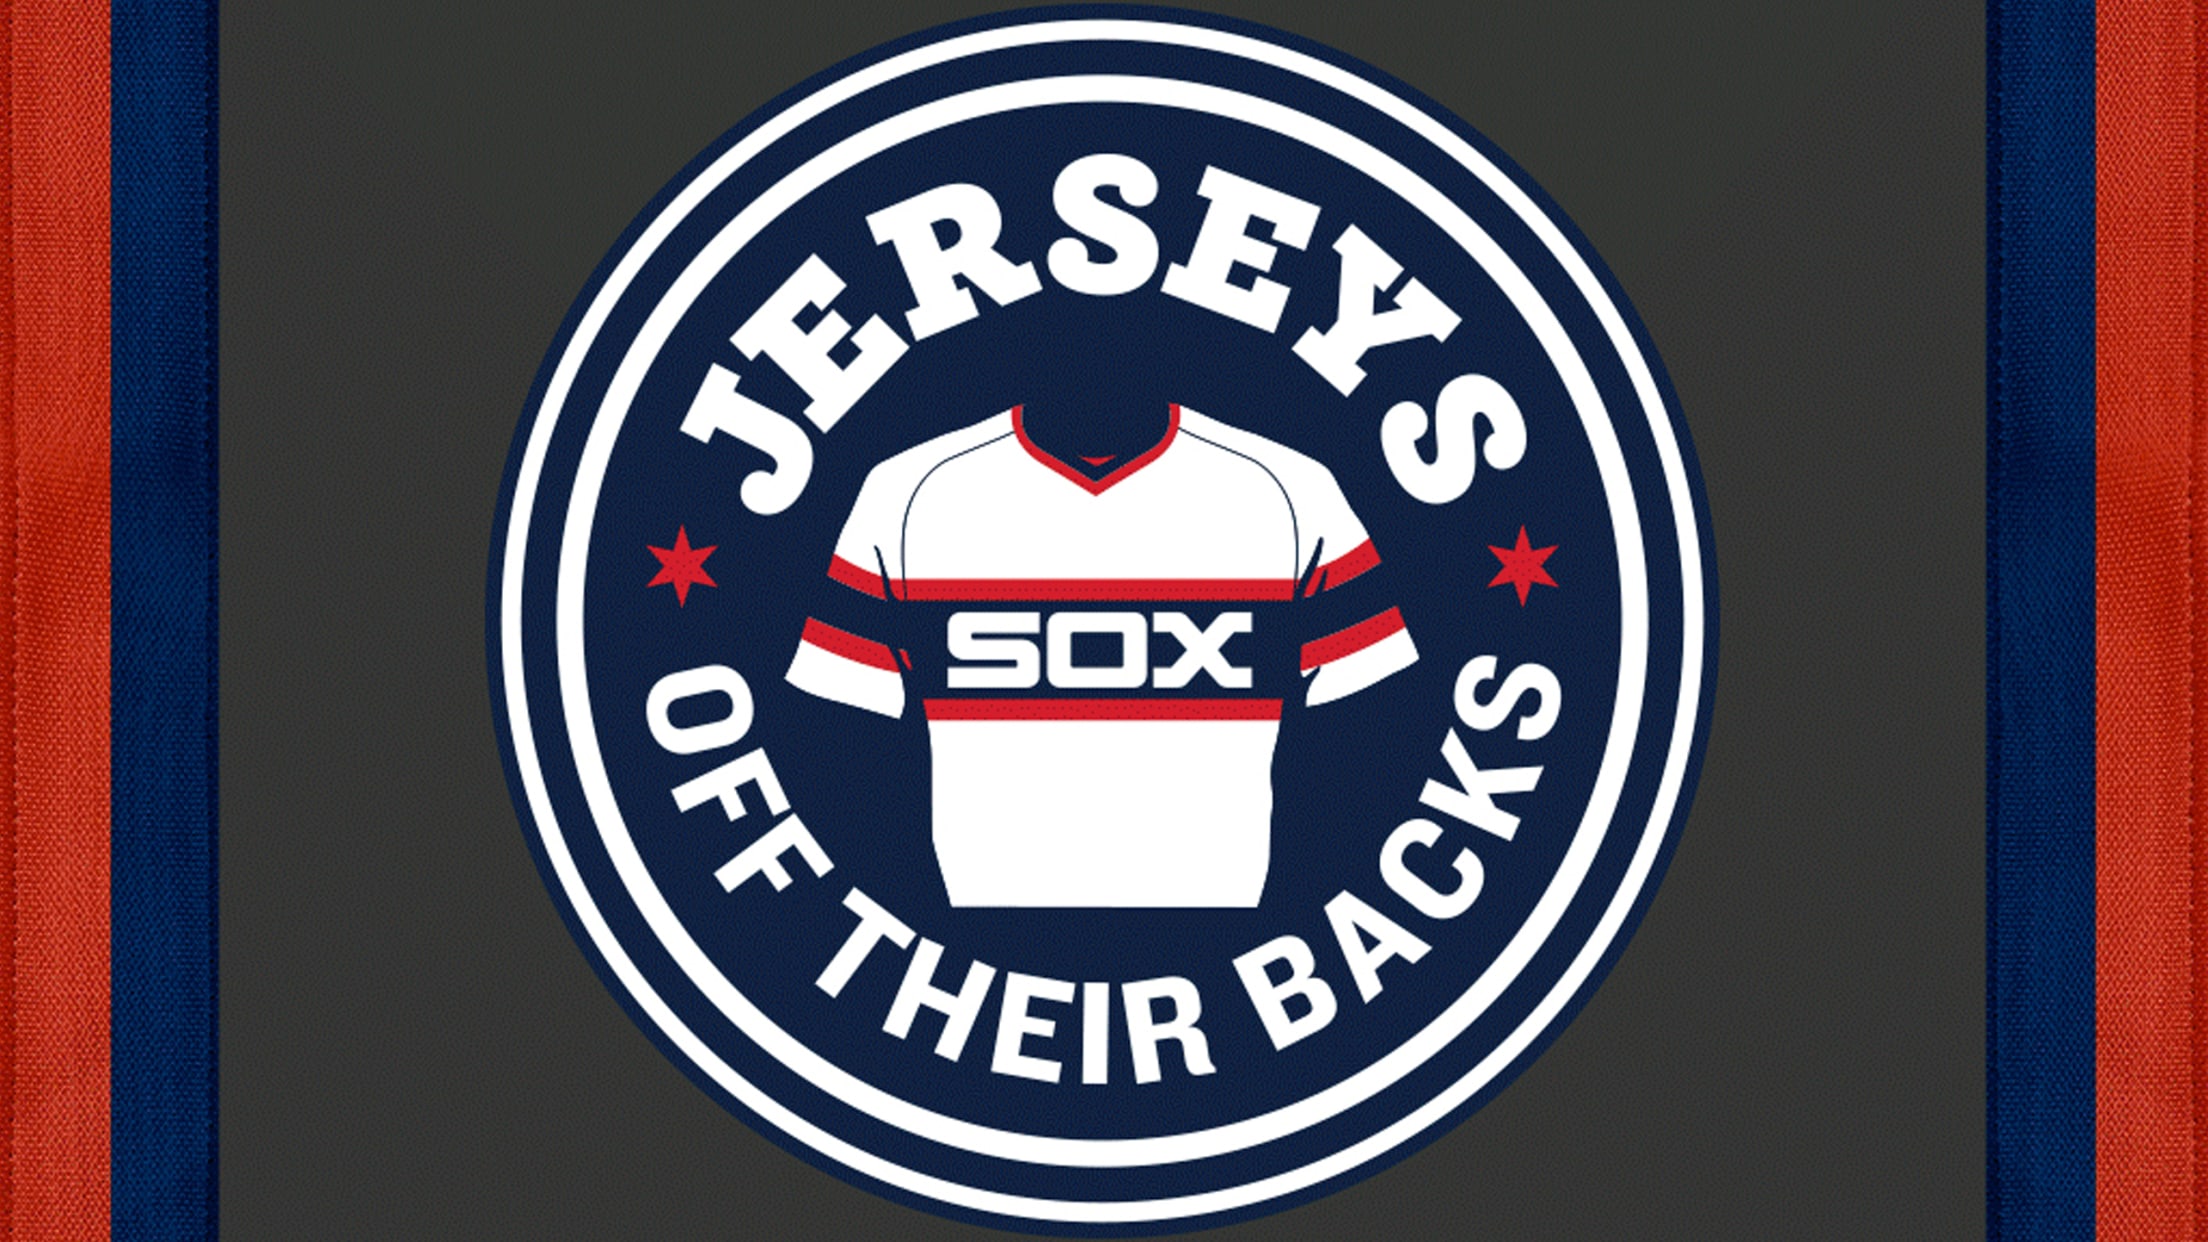 White Sox Charities Day